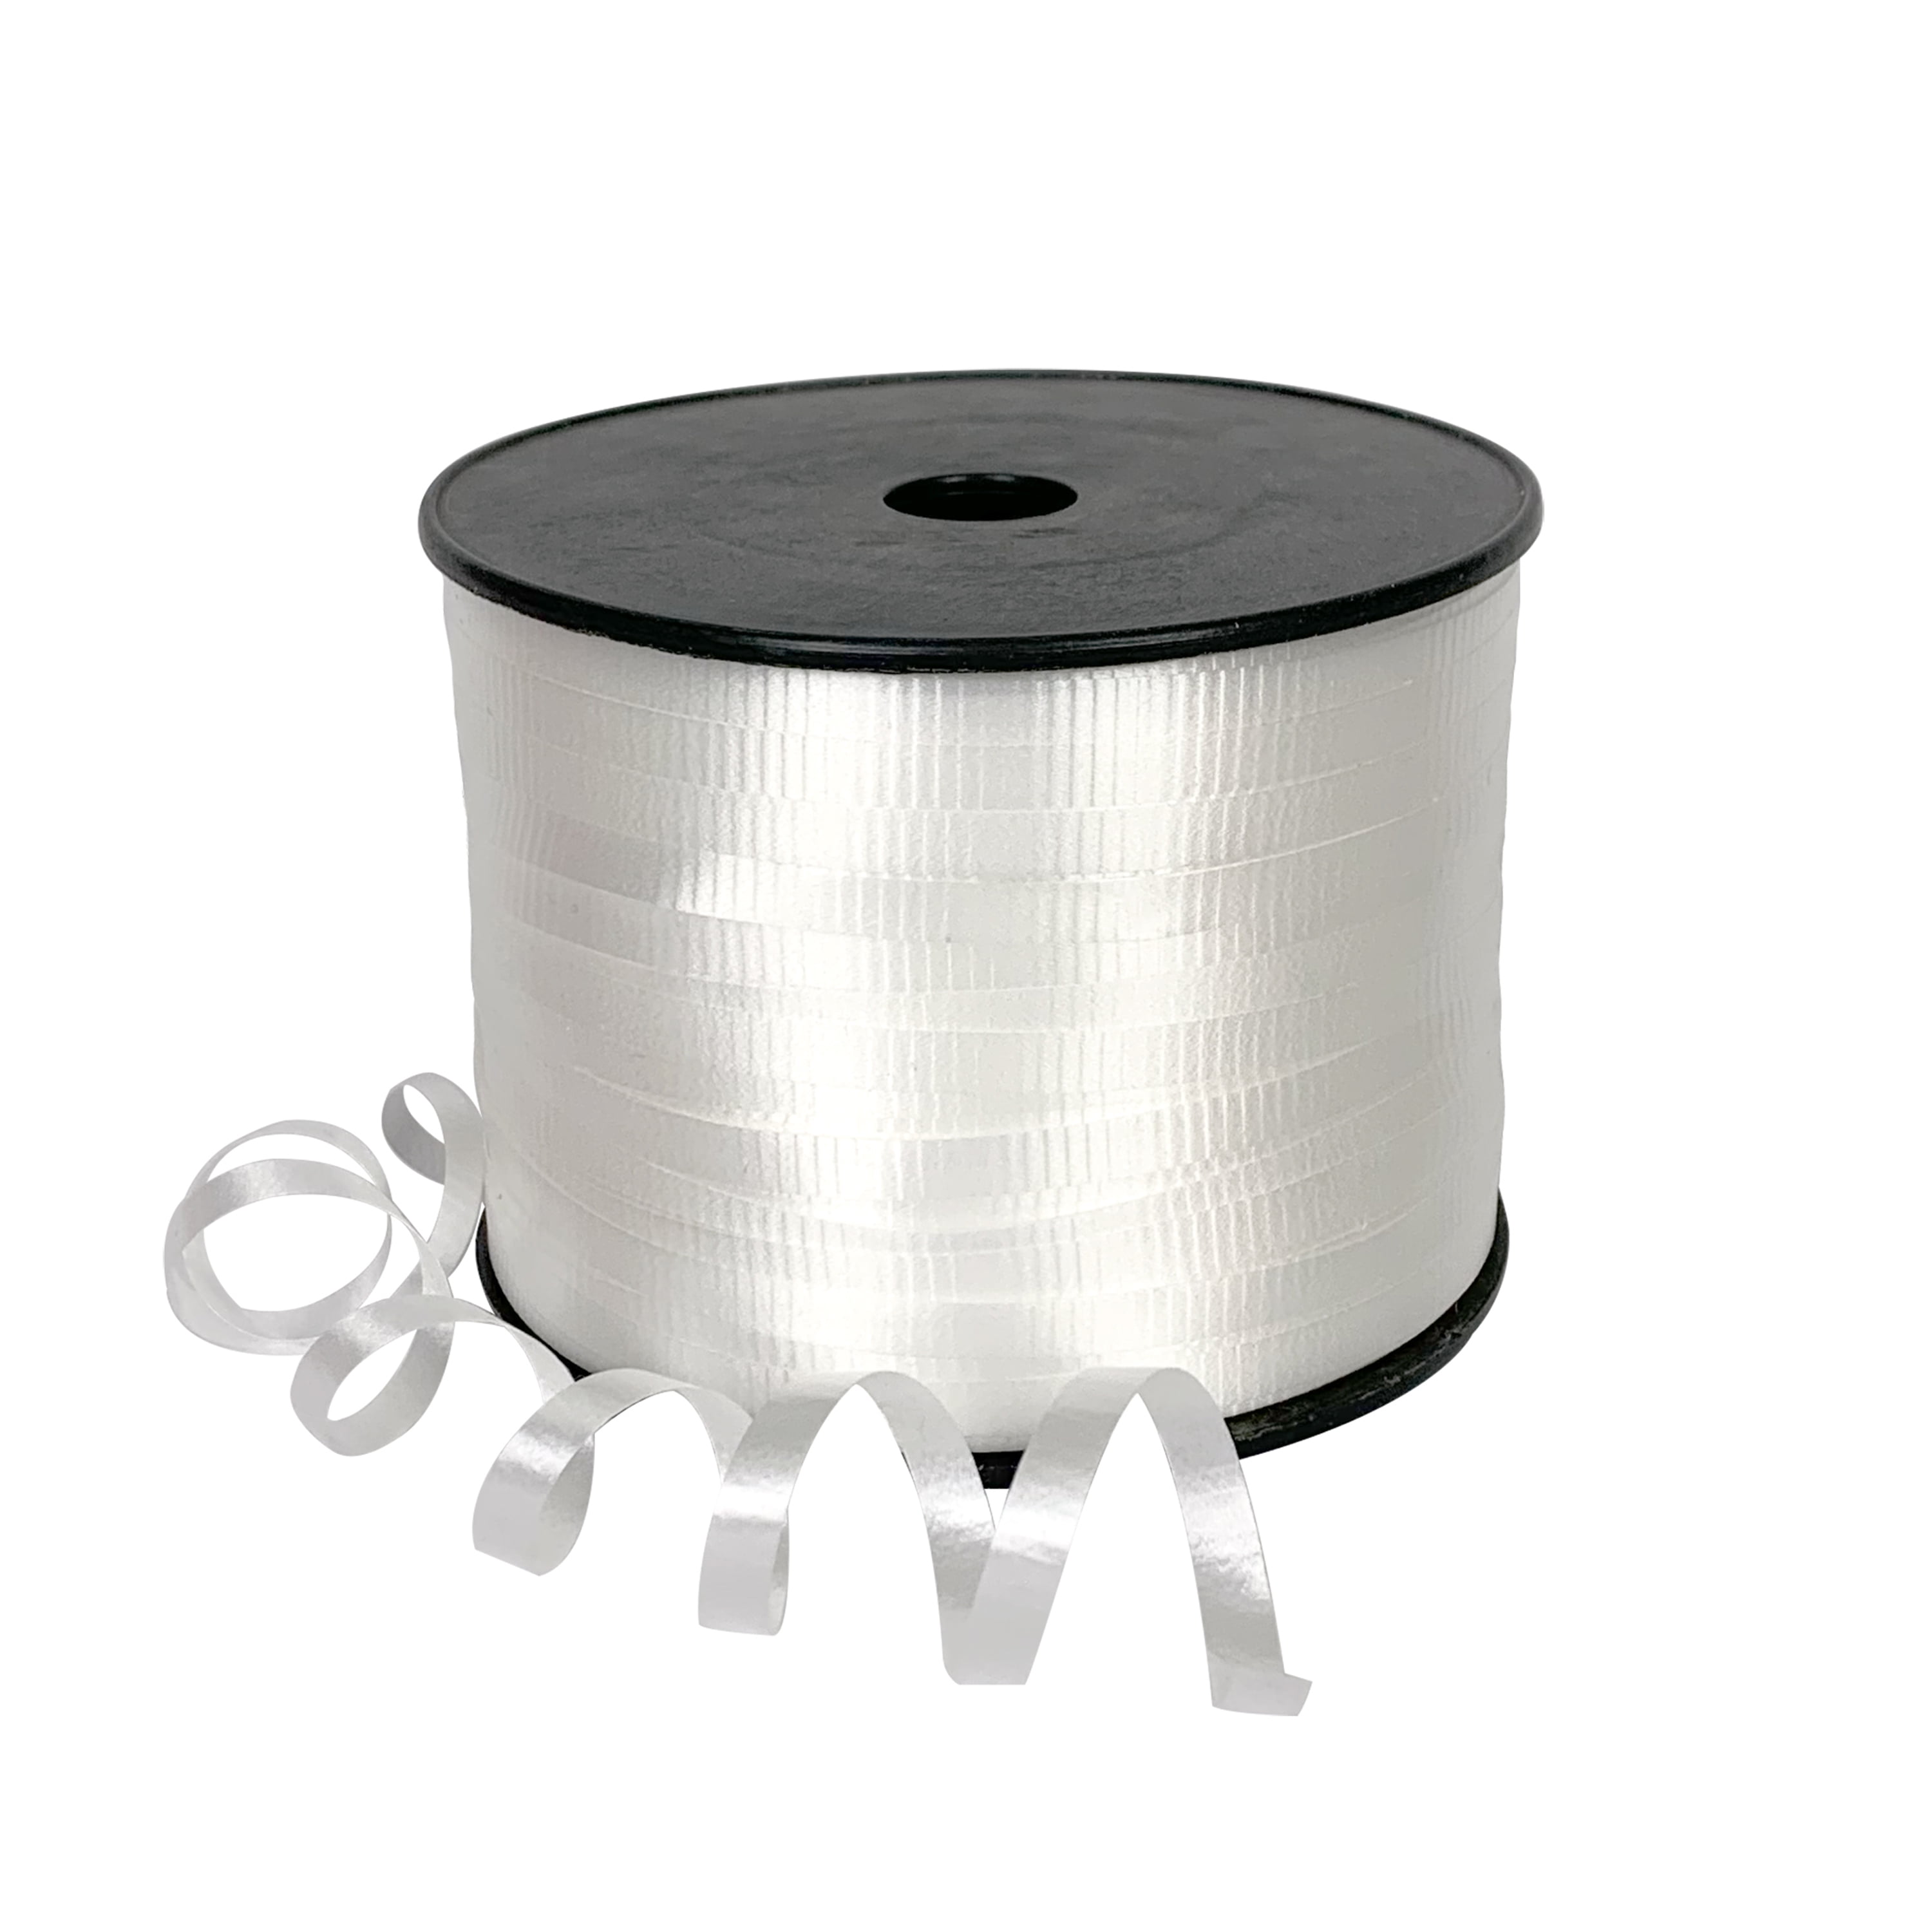 R40131, Food Safe - Silver Curling Ribbon 3/16 x 500 Yds